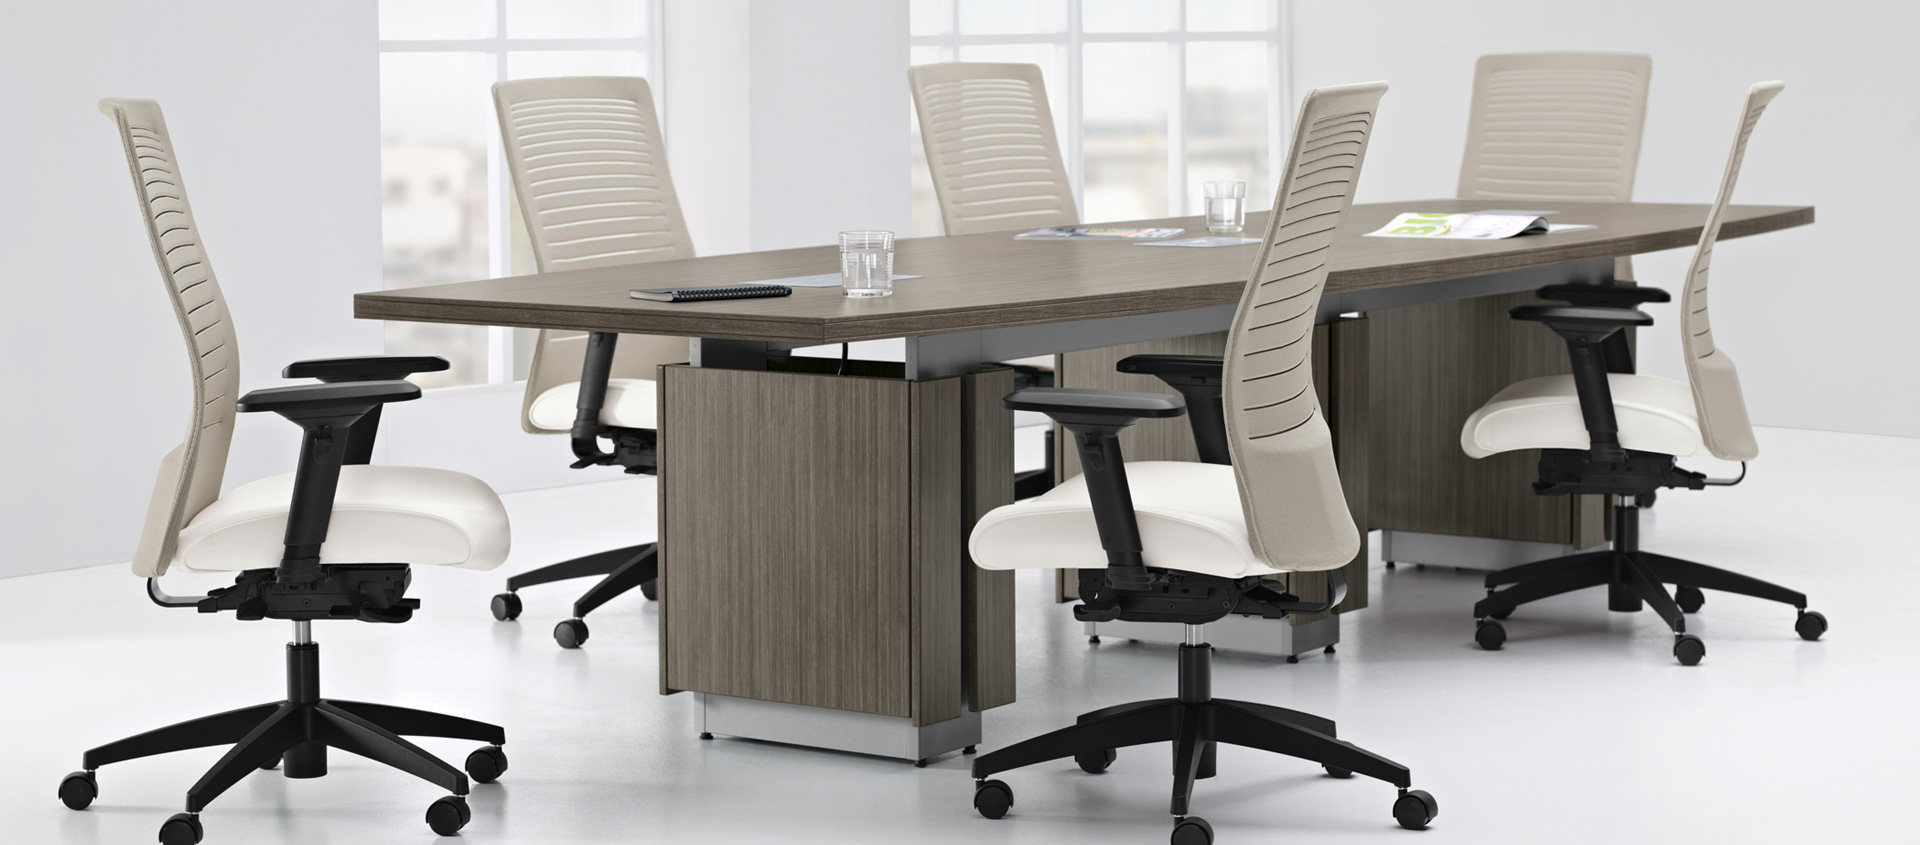 Media Boardroom Tables Zira Tables Global Furniture Group